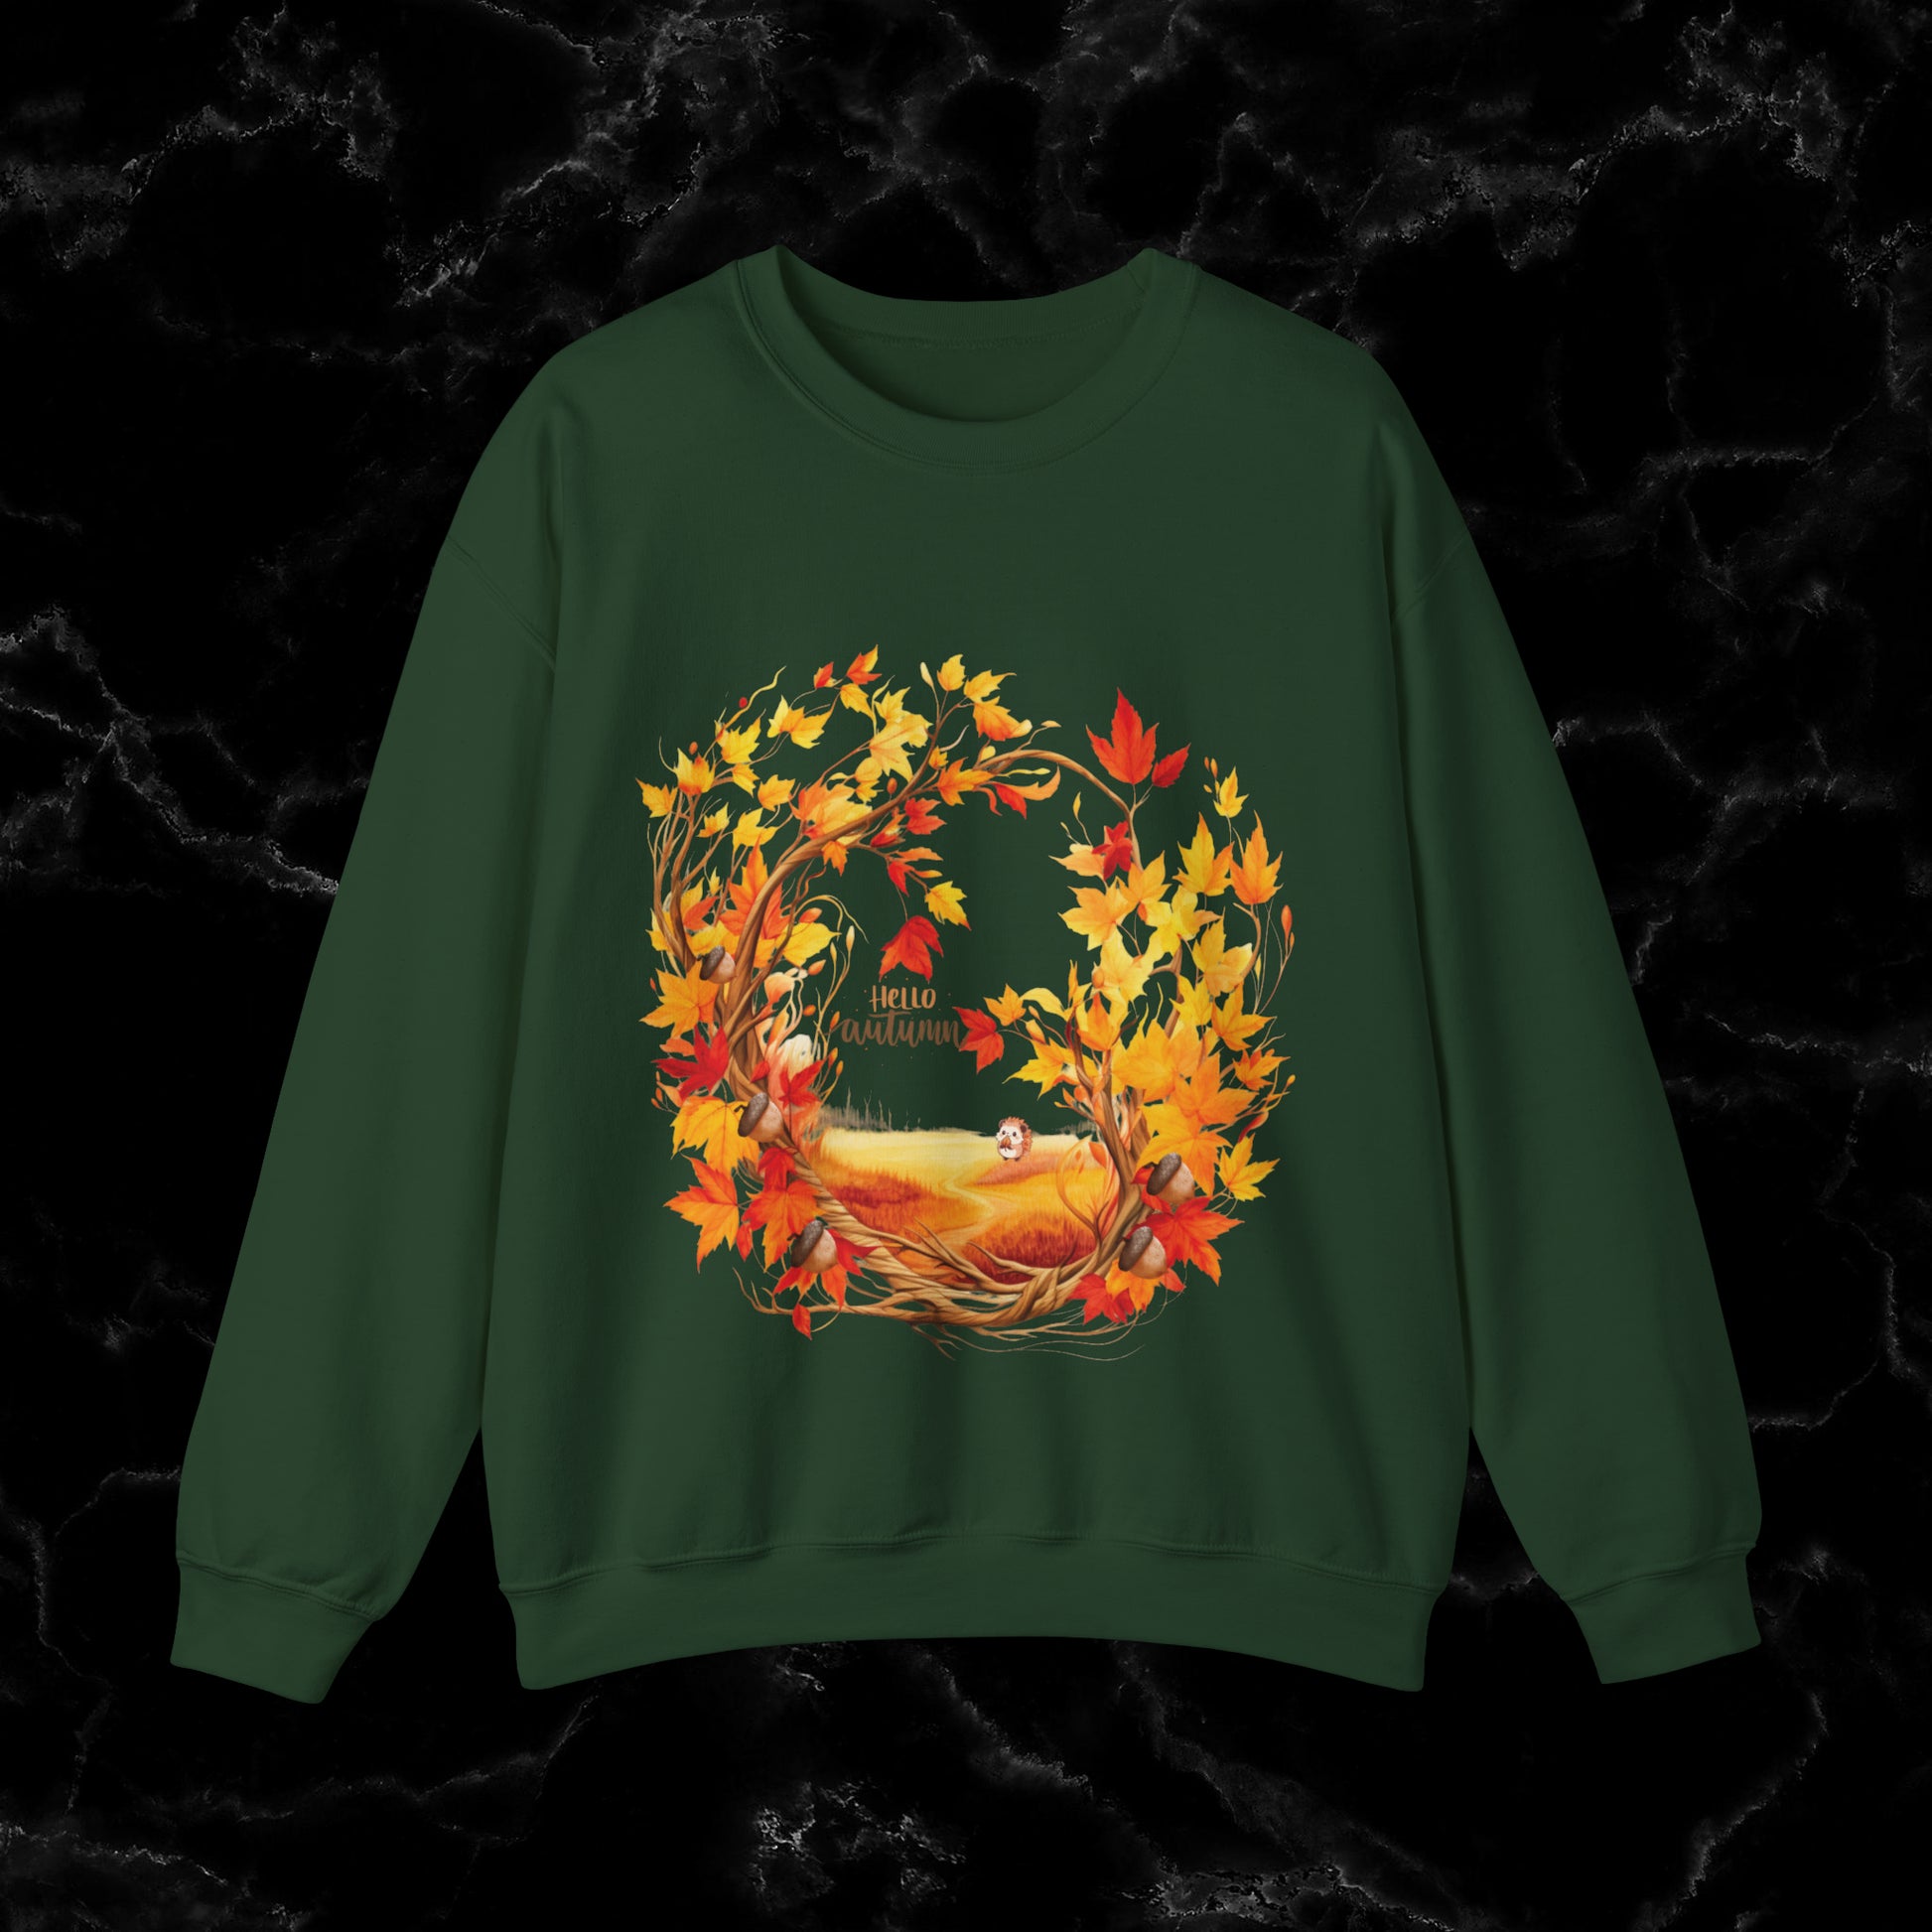 Hello Autumn Sweatshirt | Fall Design - Fall Seasonal Sweatshirt - Beauty Of Autumn Sweatshirt S Forest Green 